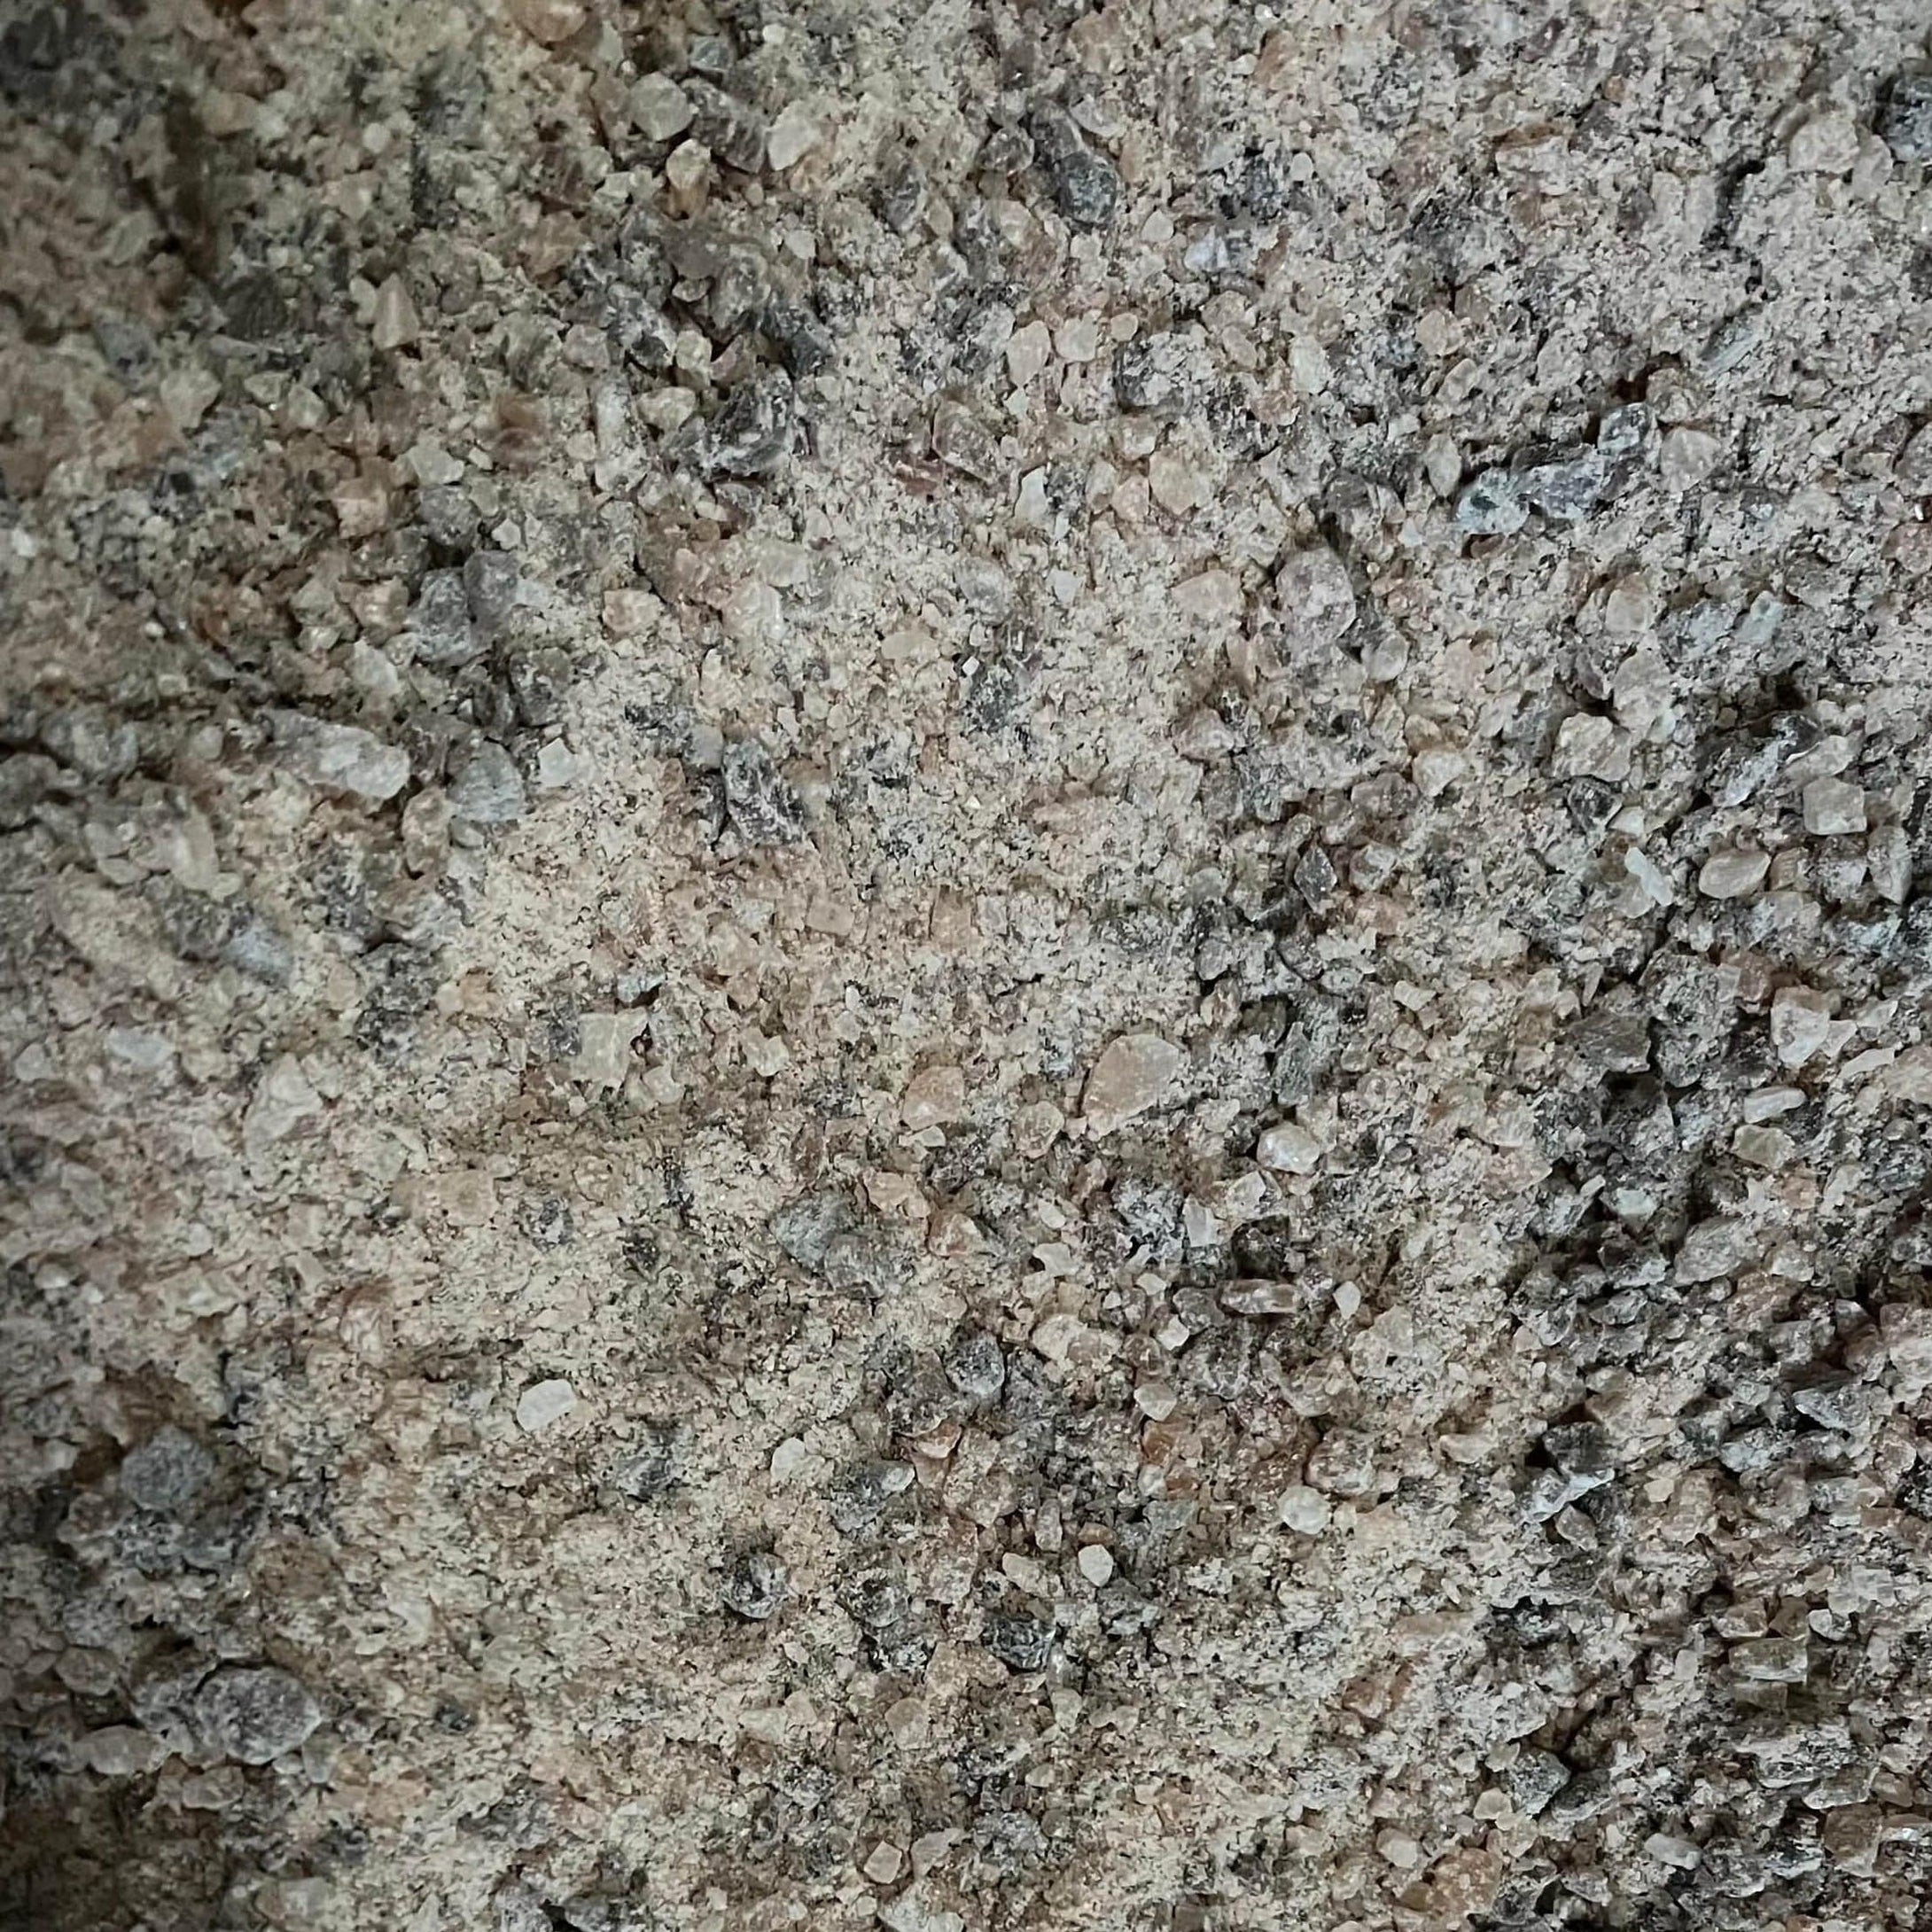 Winter Rock Salt in Bulk Bags